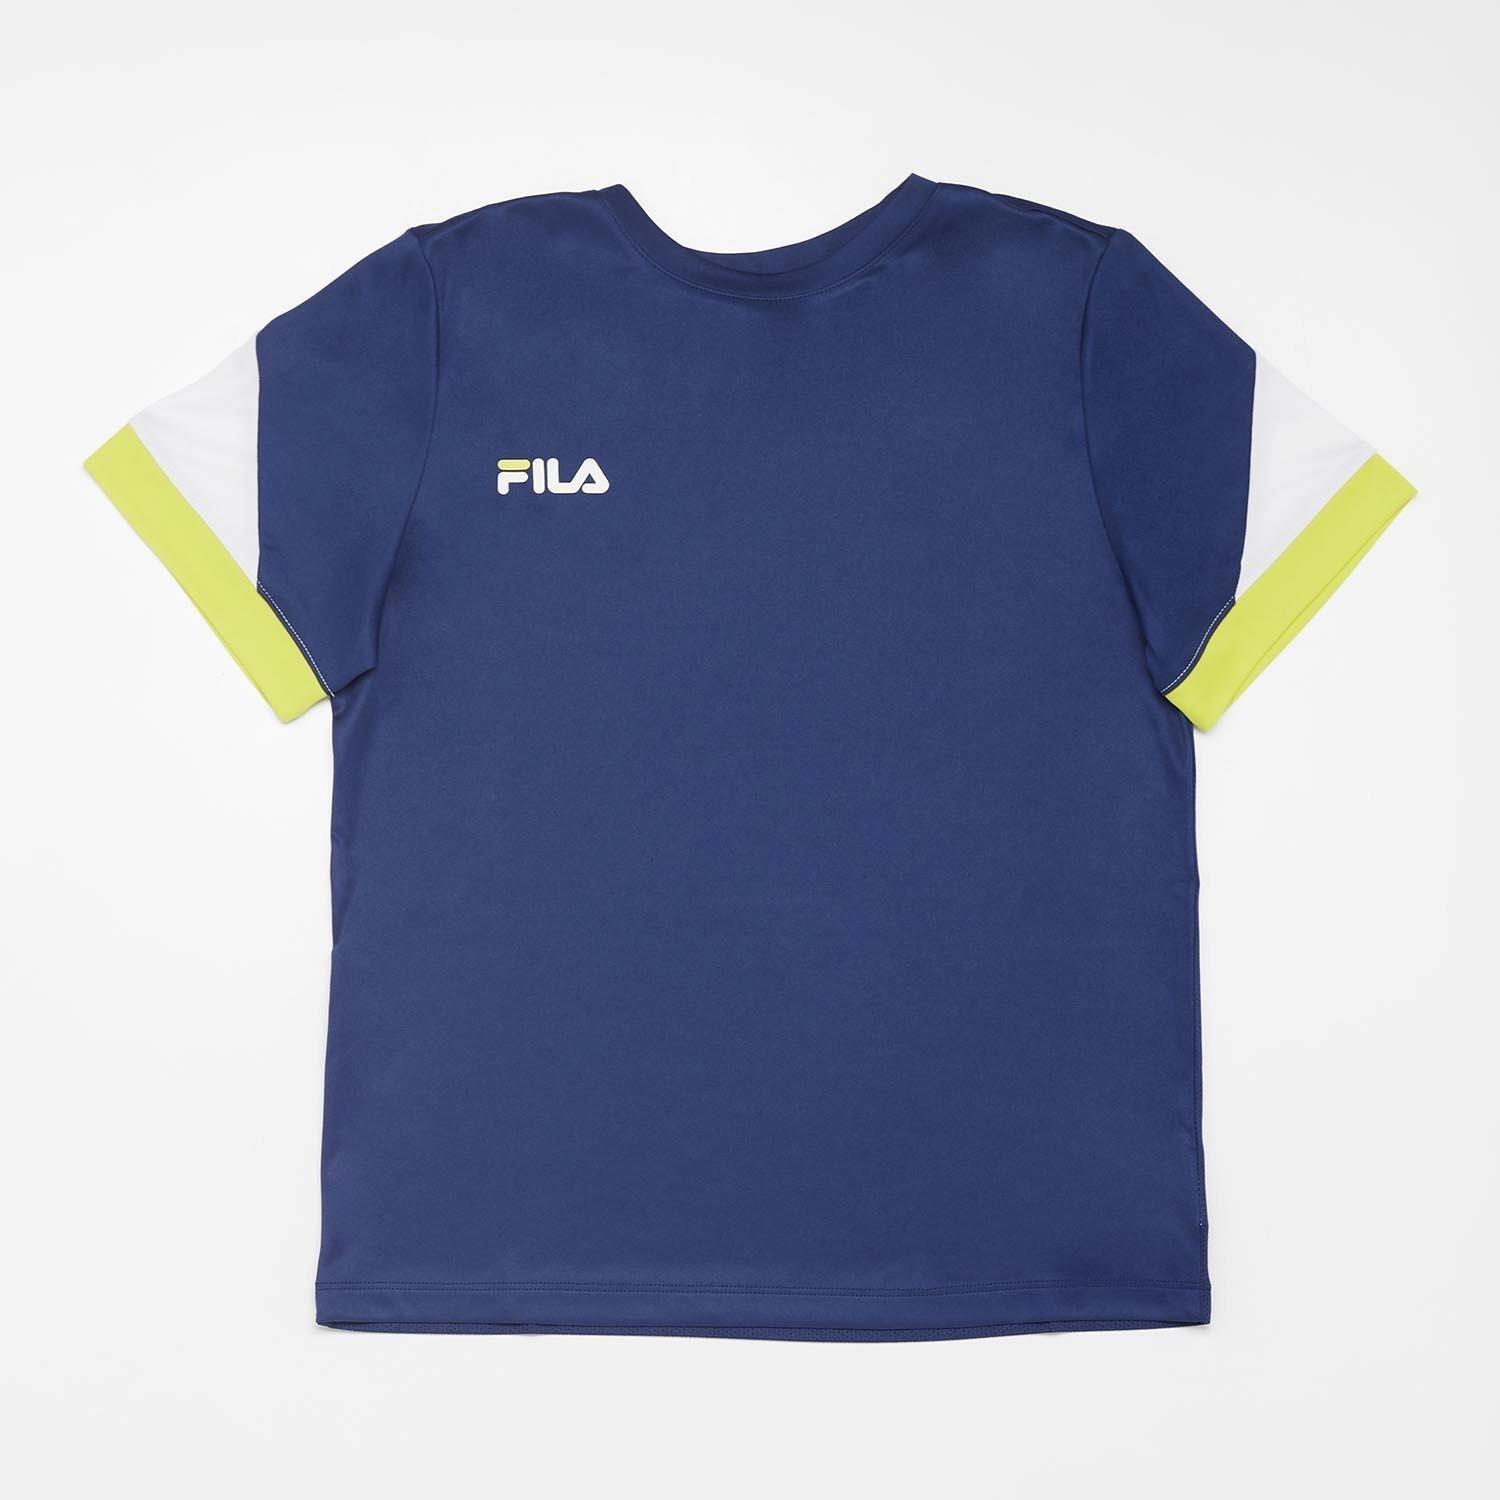 Fila Fila basic voetbalshirt blauw/wit kinderen kinderen